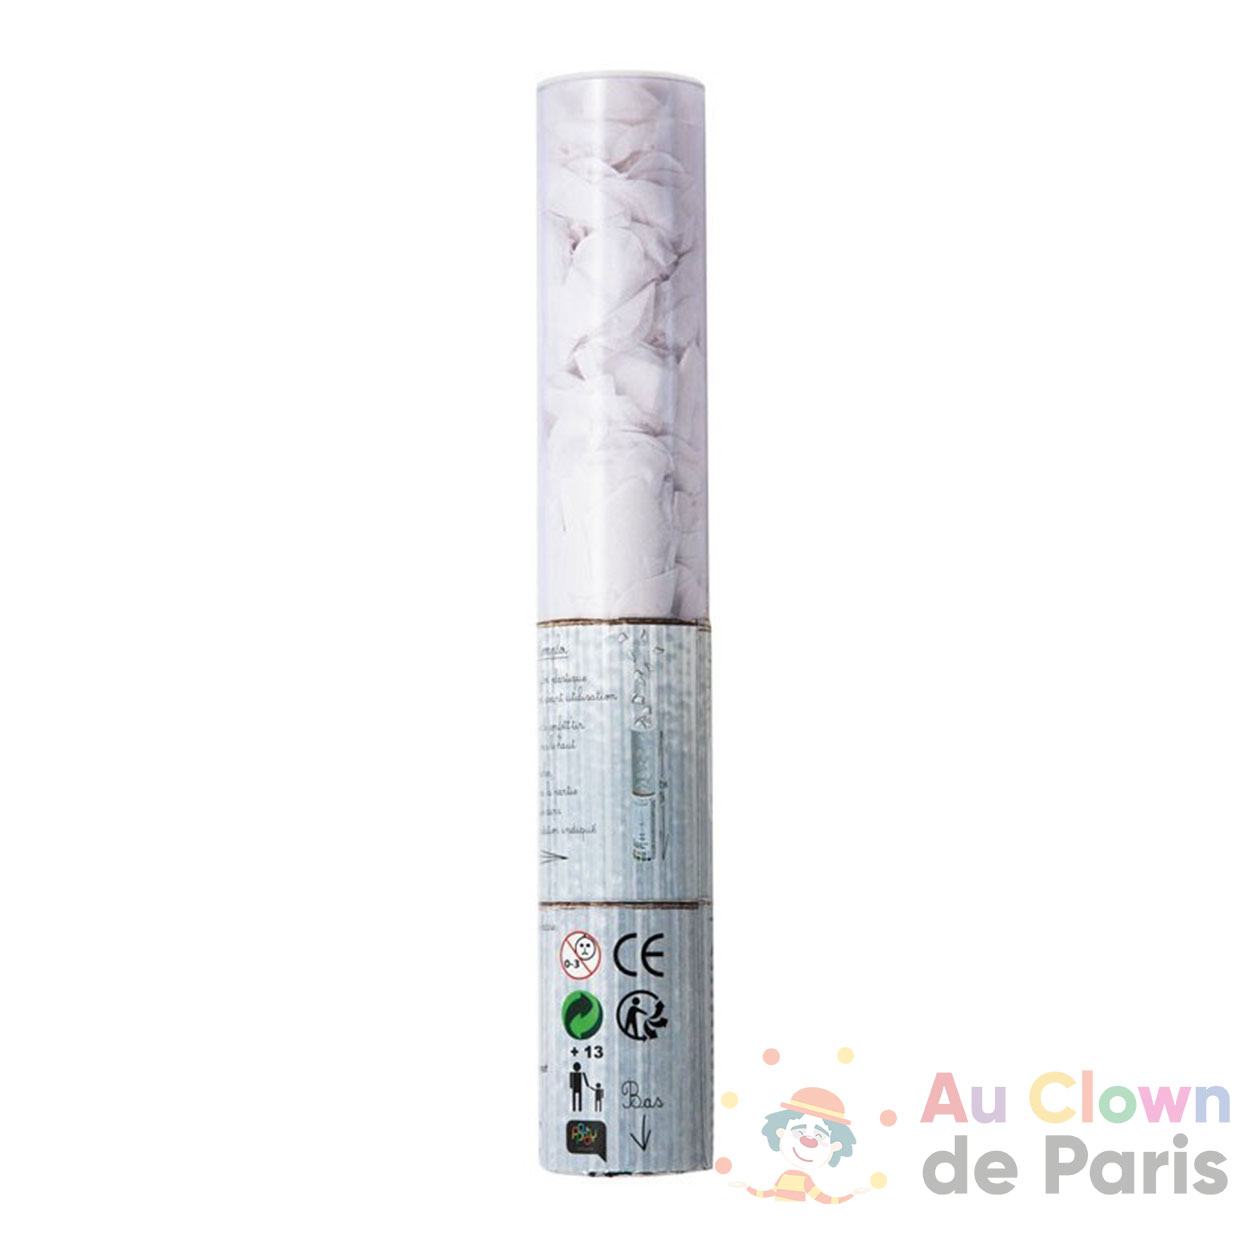 Canon confetti coeur blanc - Au Clown de Paris